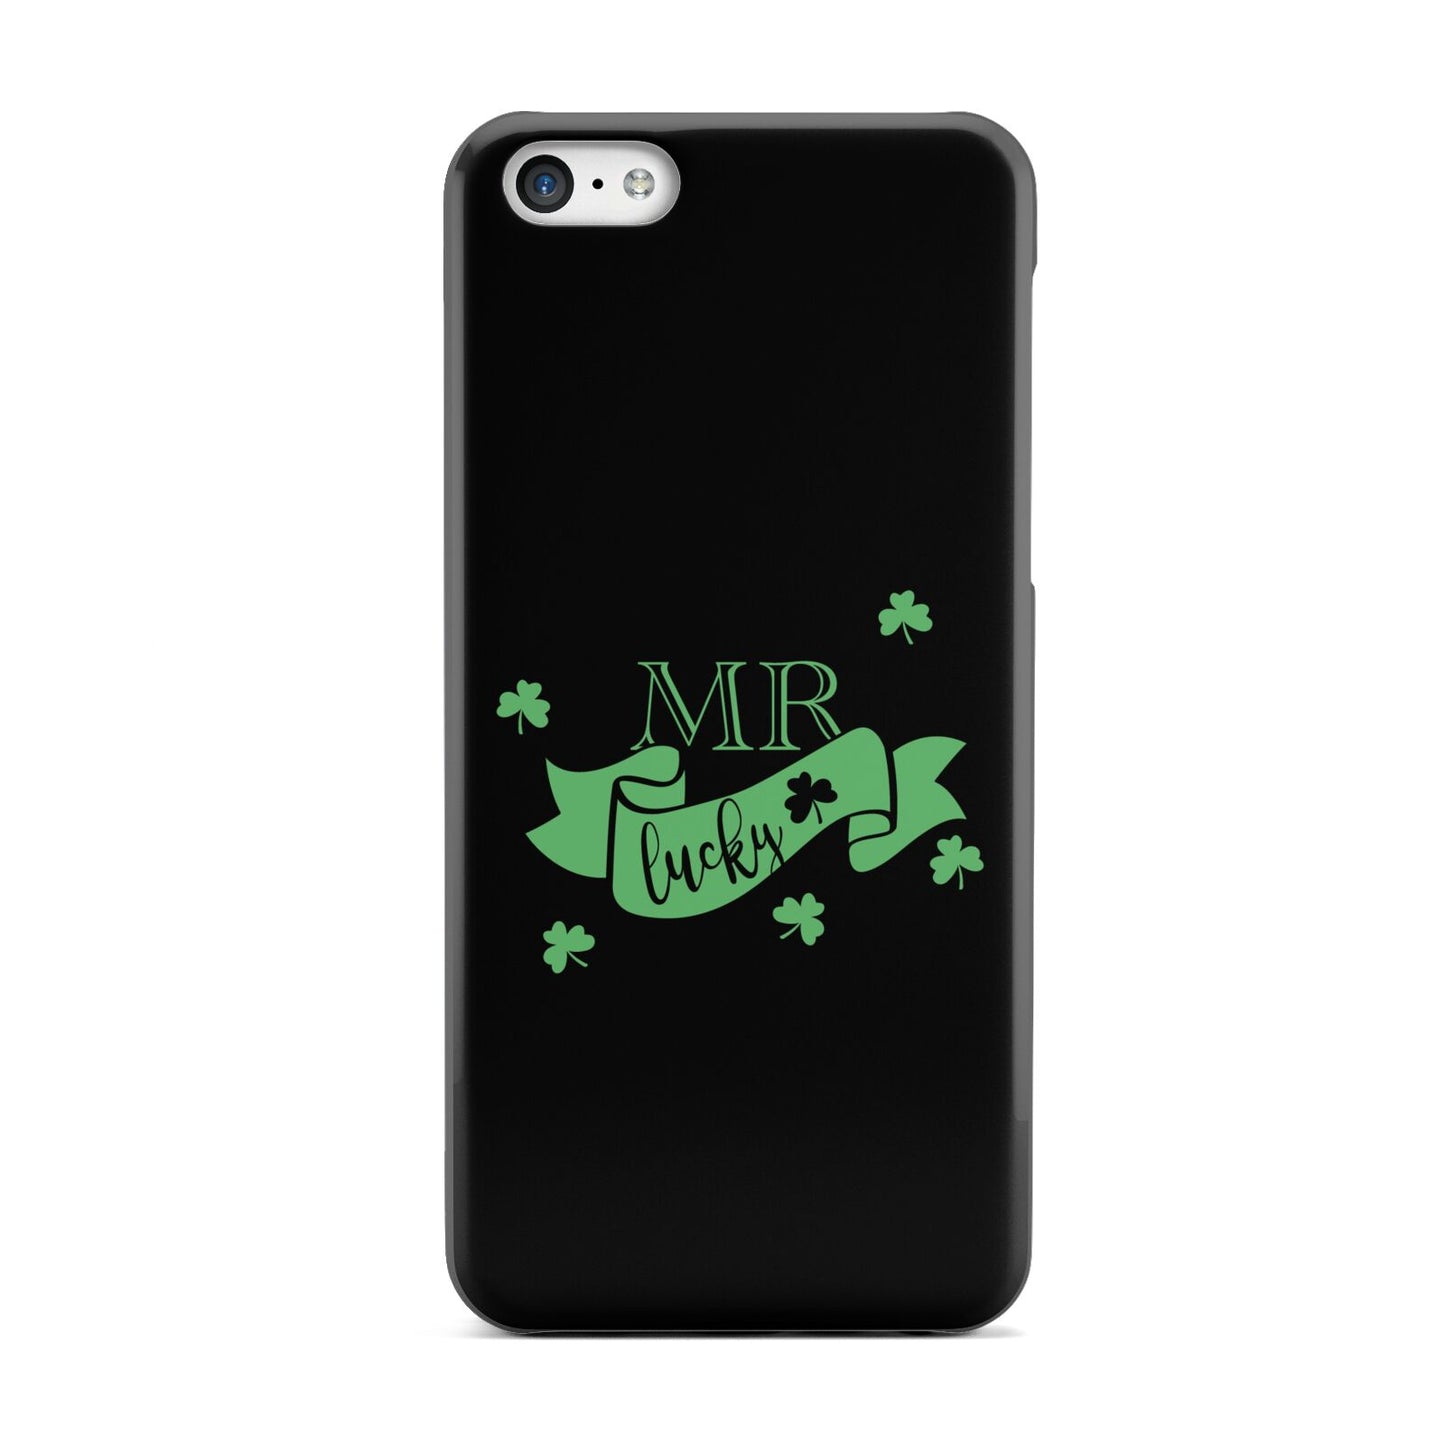 Mr Lucky Apple iPhone 5c Case